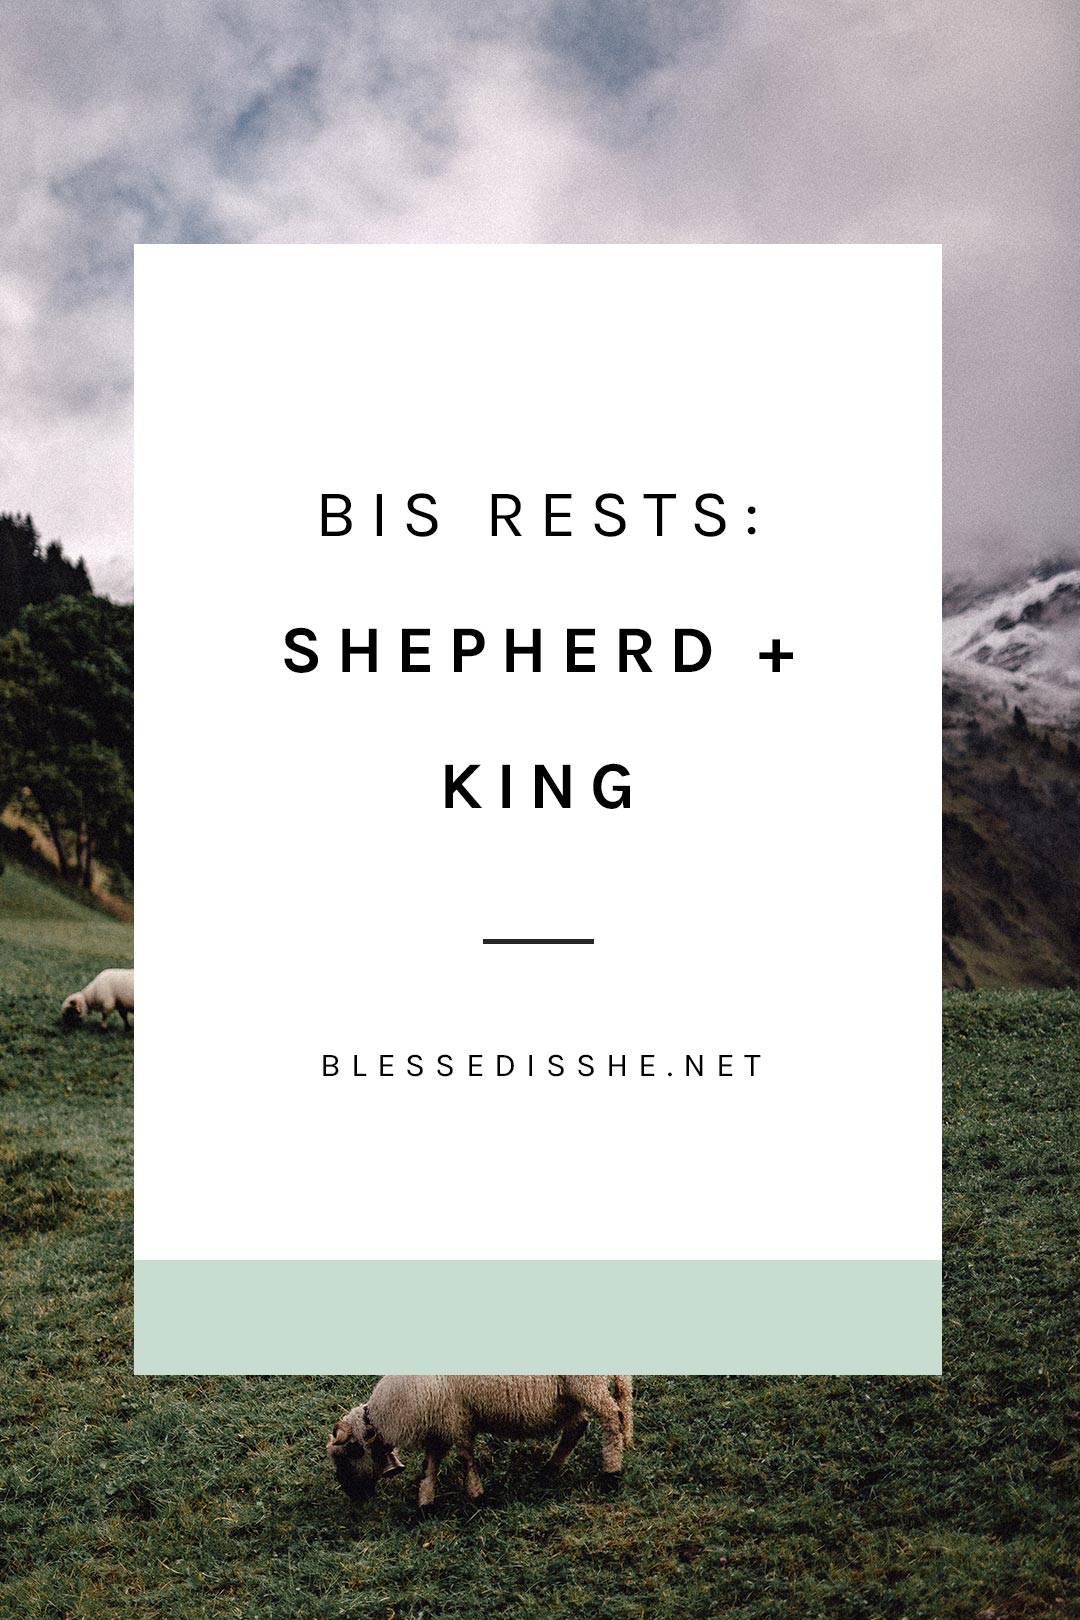 bis rests shepherd + king